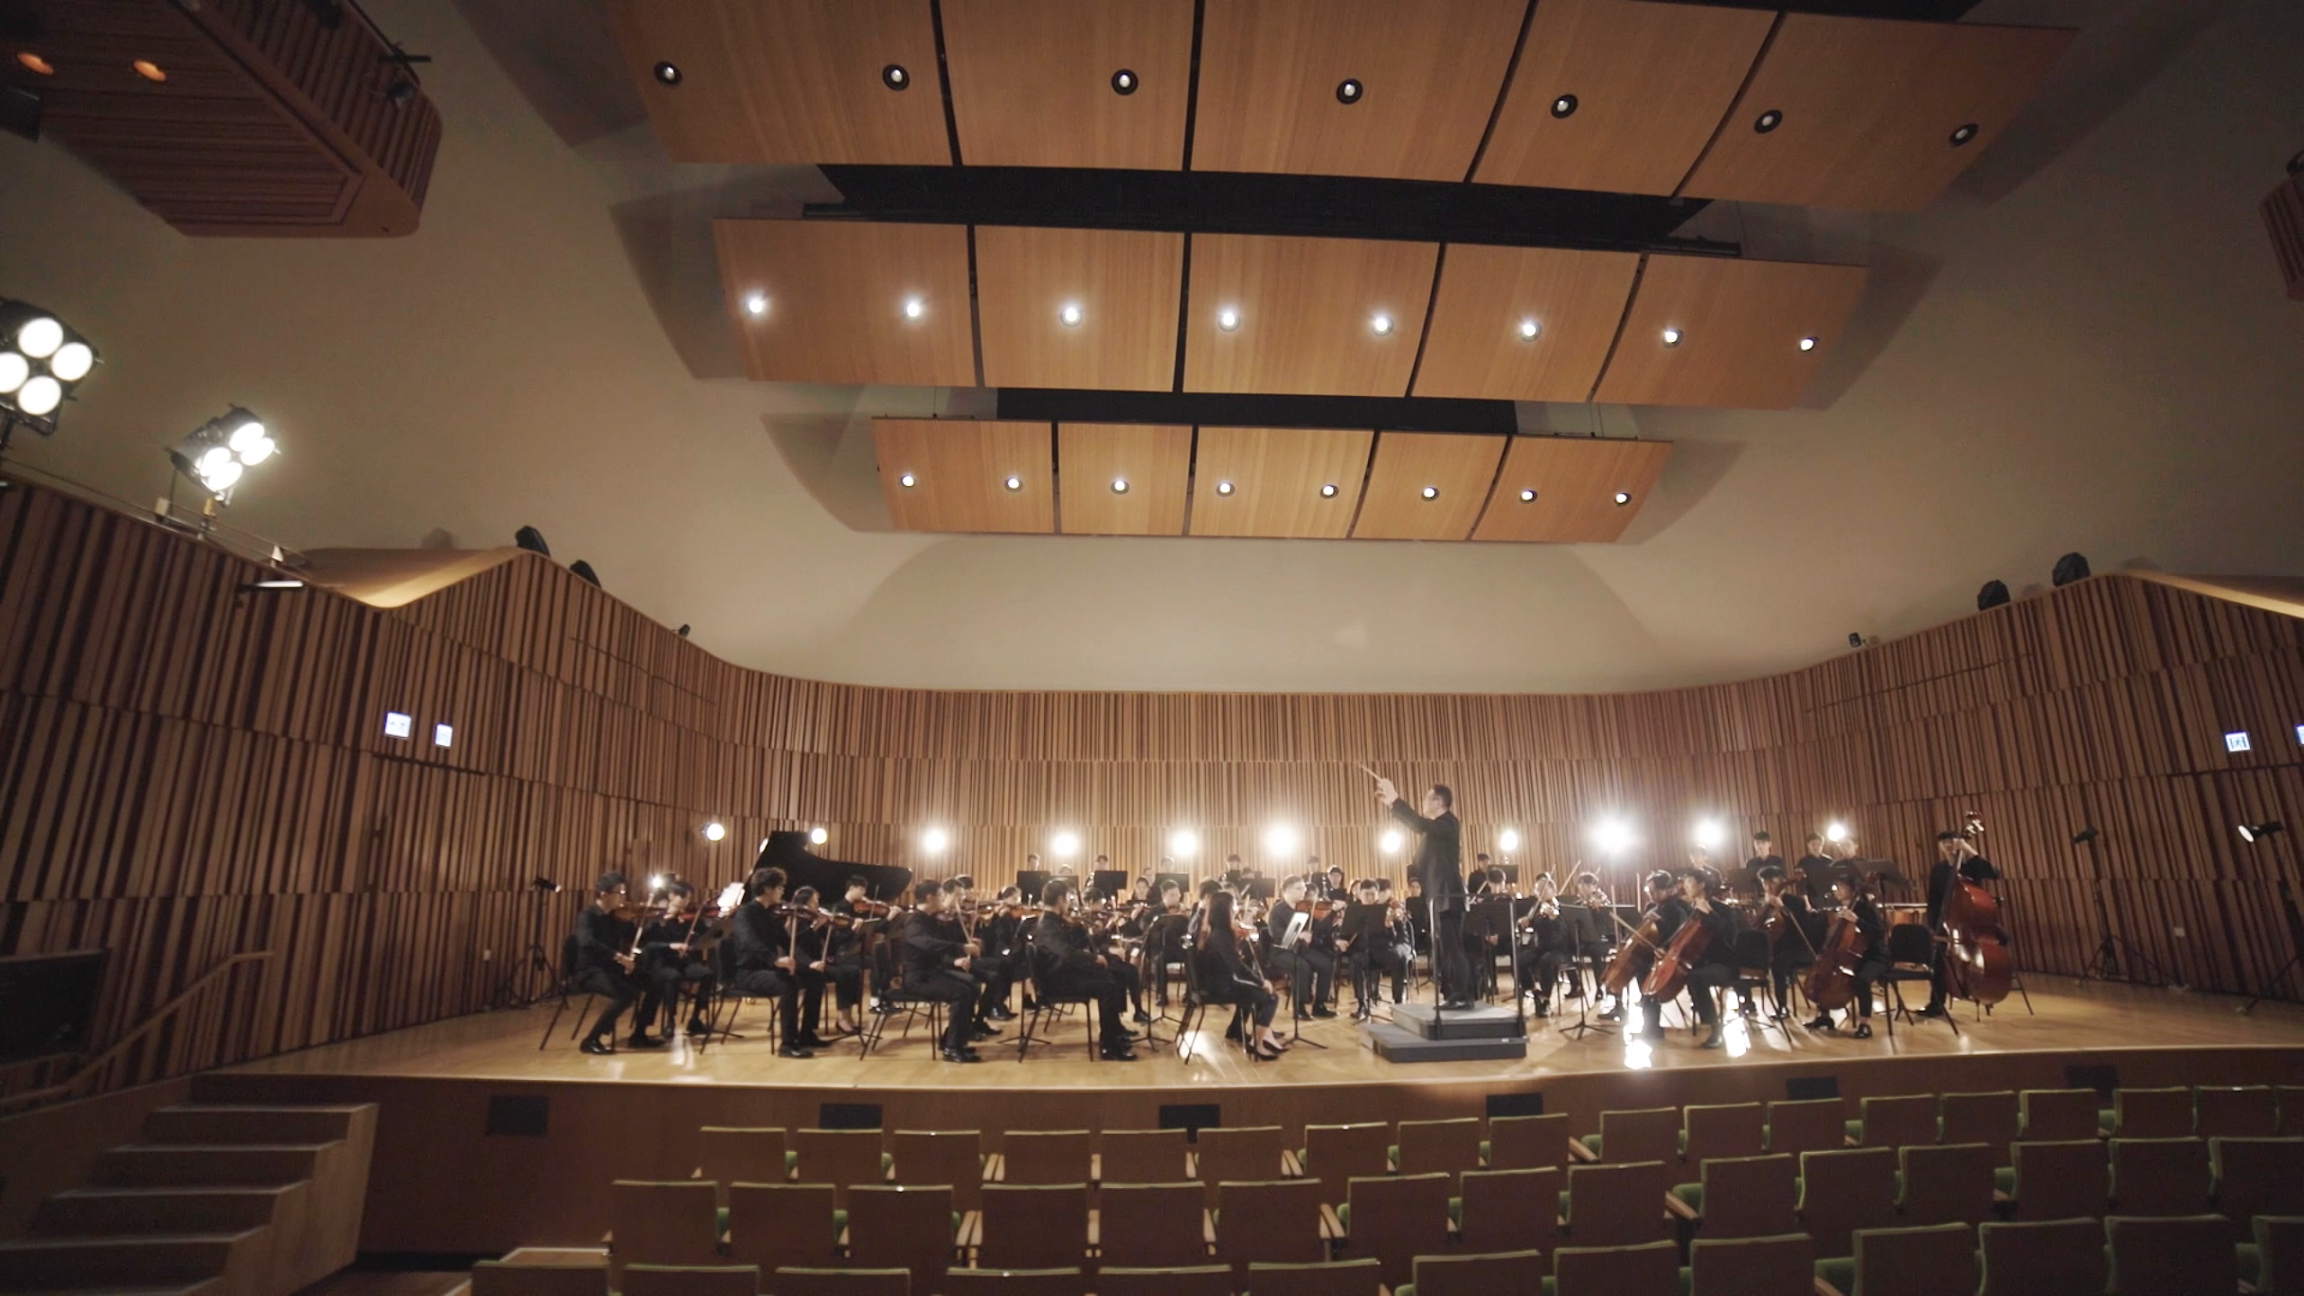 HKUST's Philharmonic Orhcestra playing the University Anthem